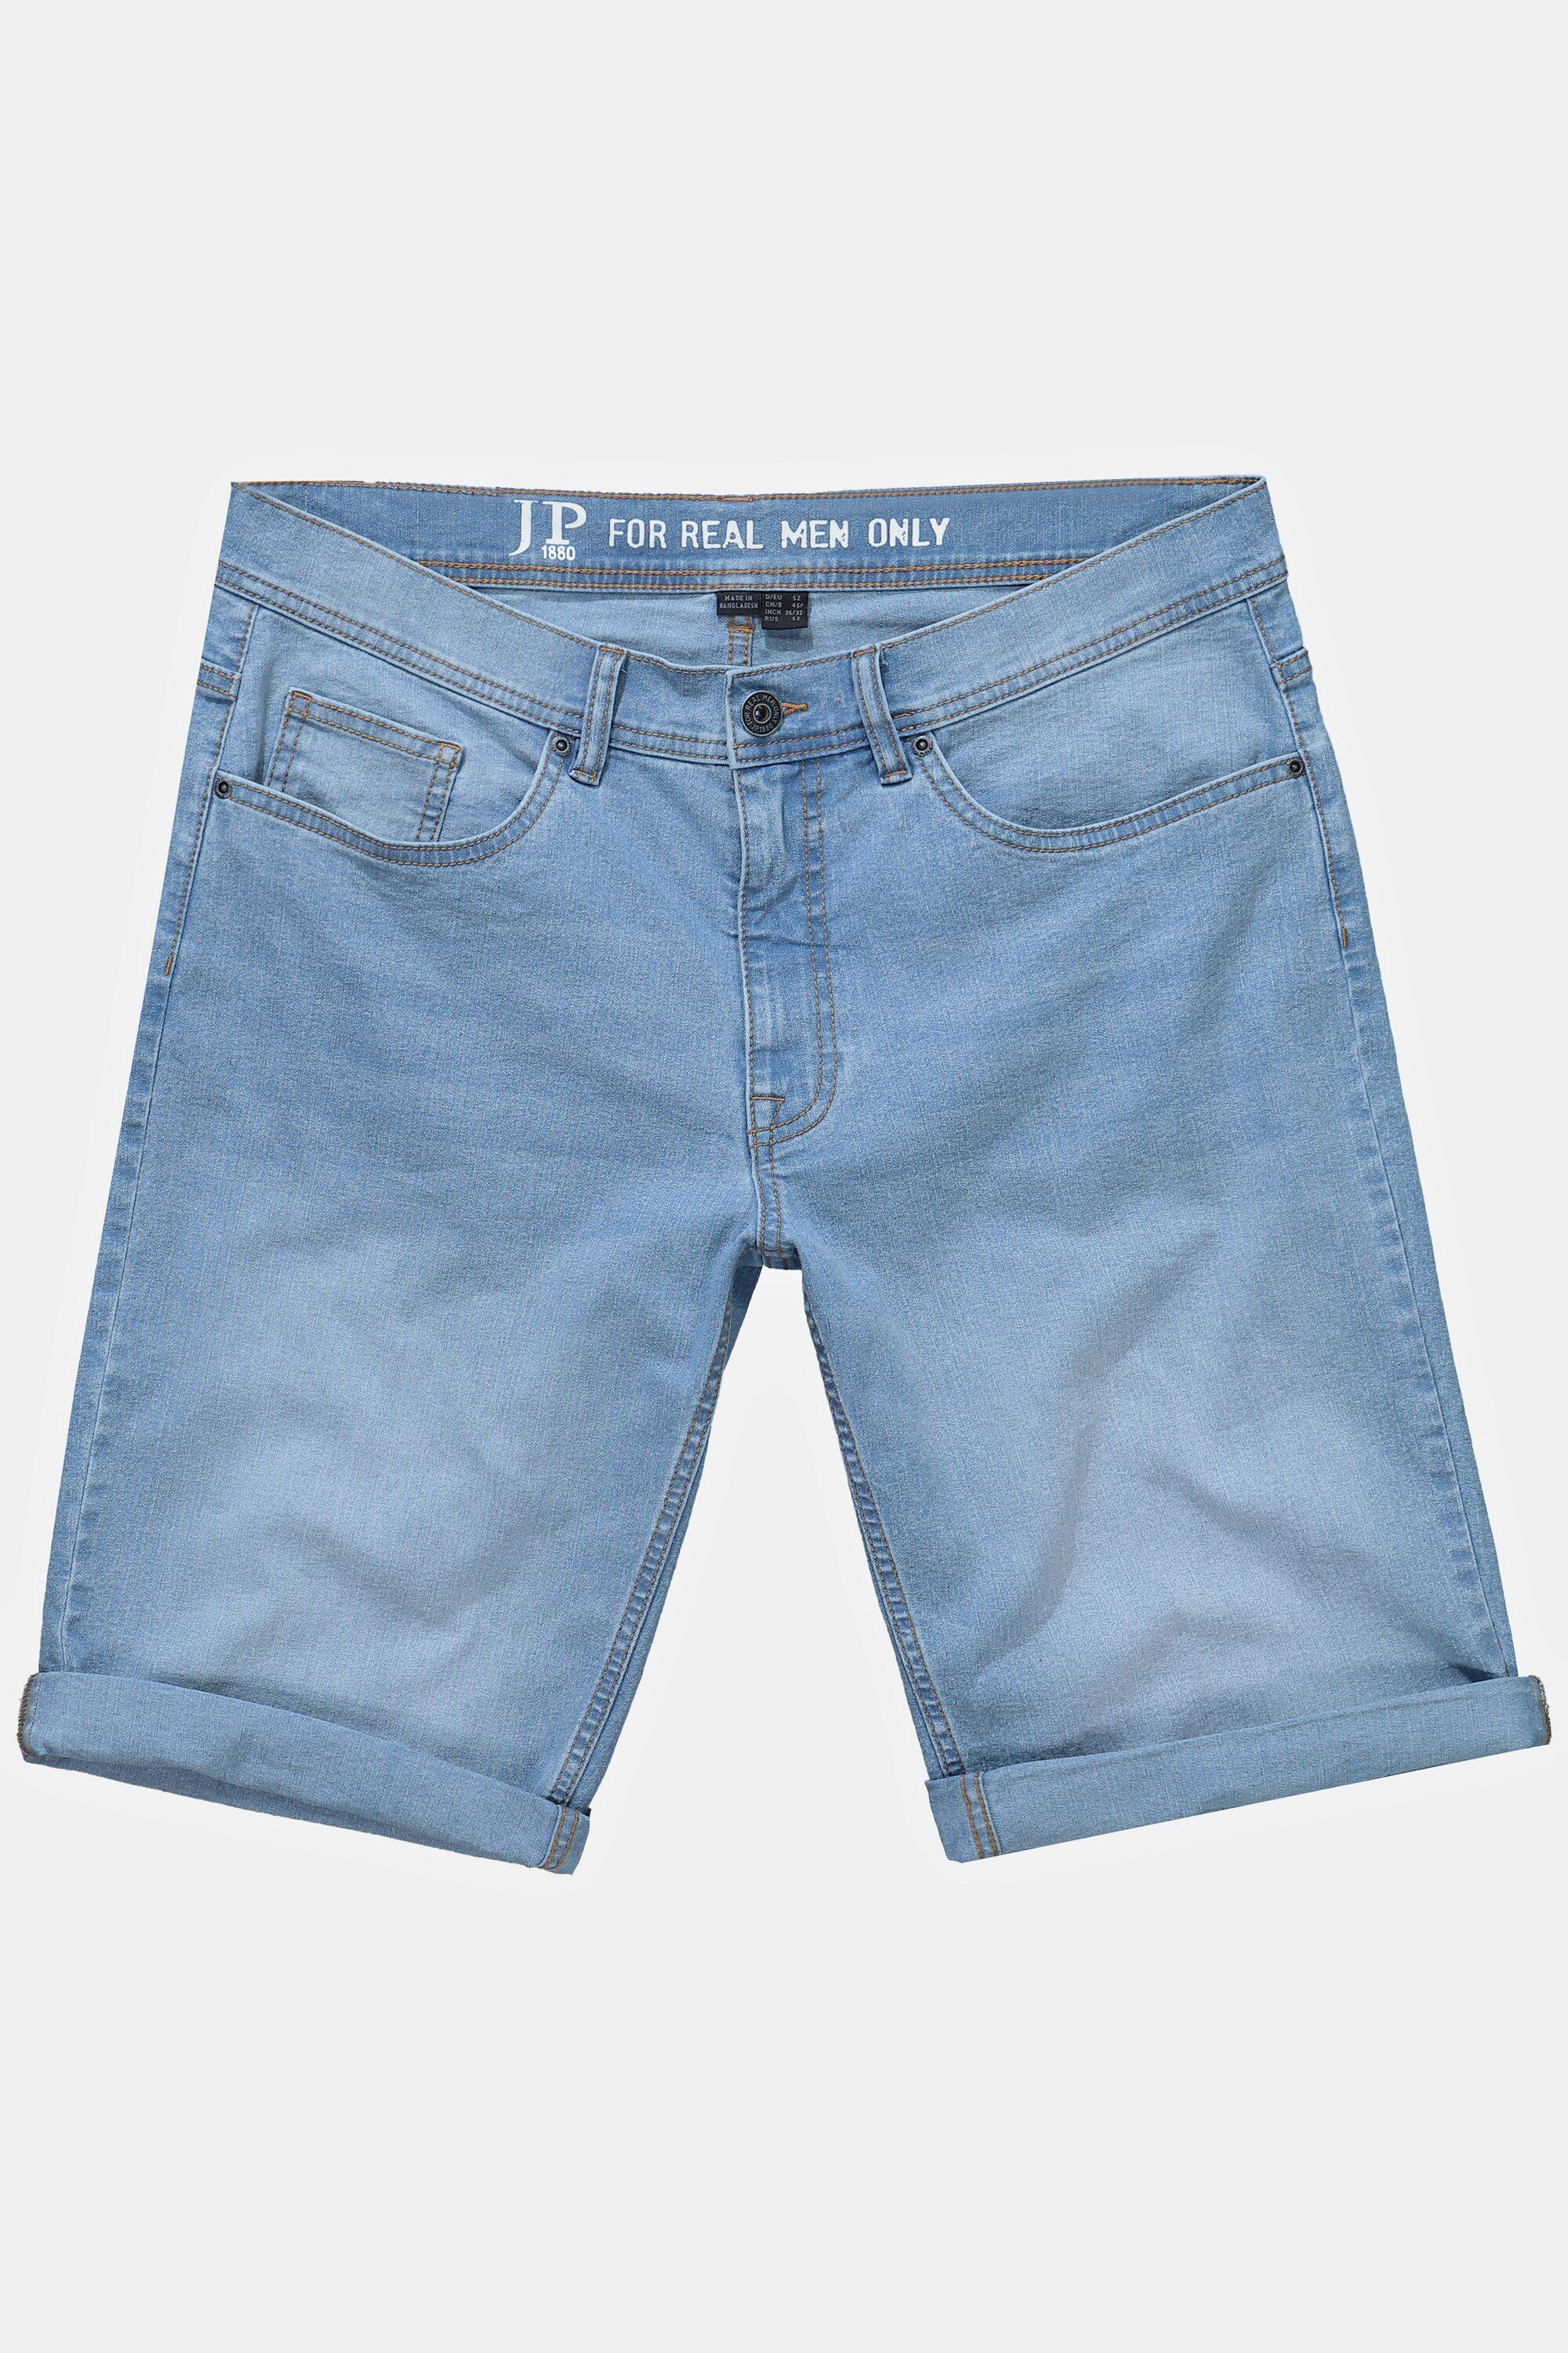 JP1880 Regular Denim denim Bermuda bleached 5-Pocket Stretch Jeansbermudas Fit